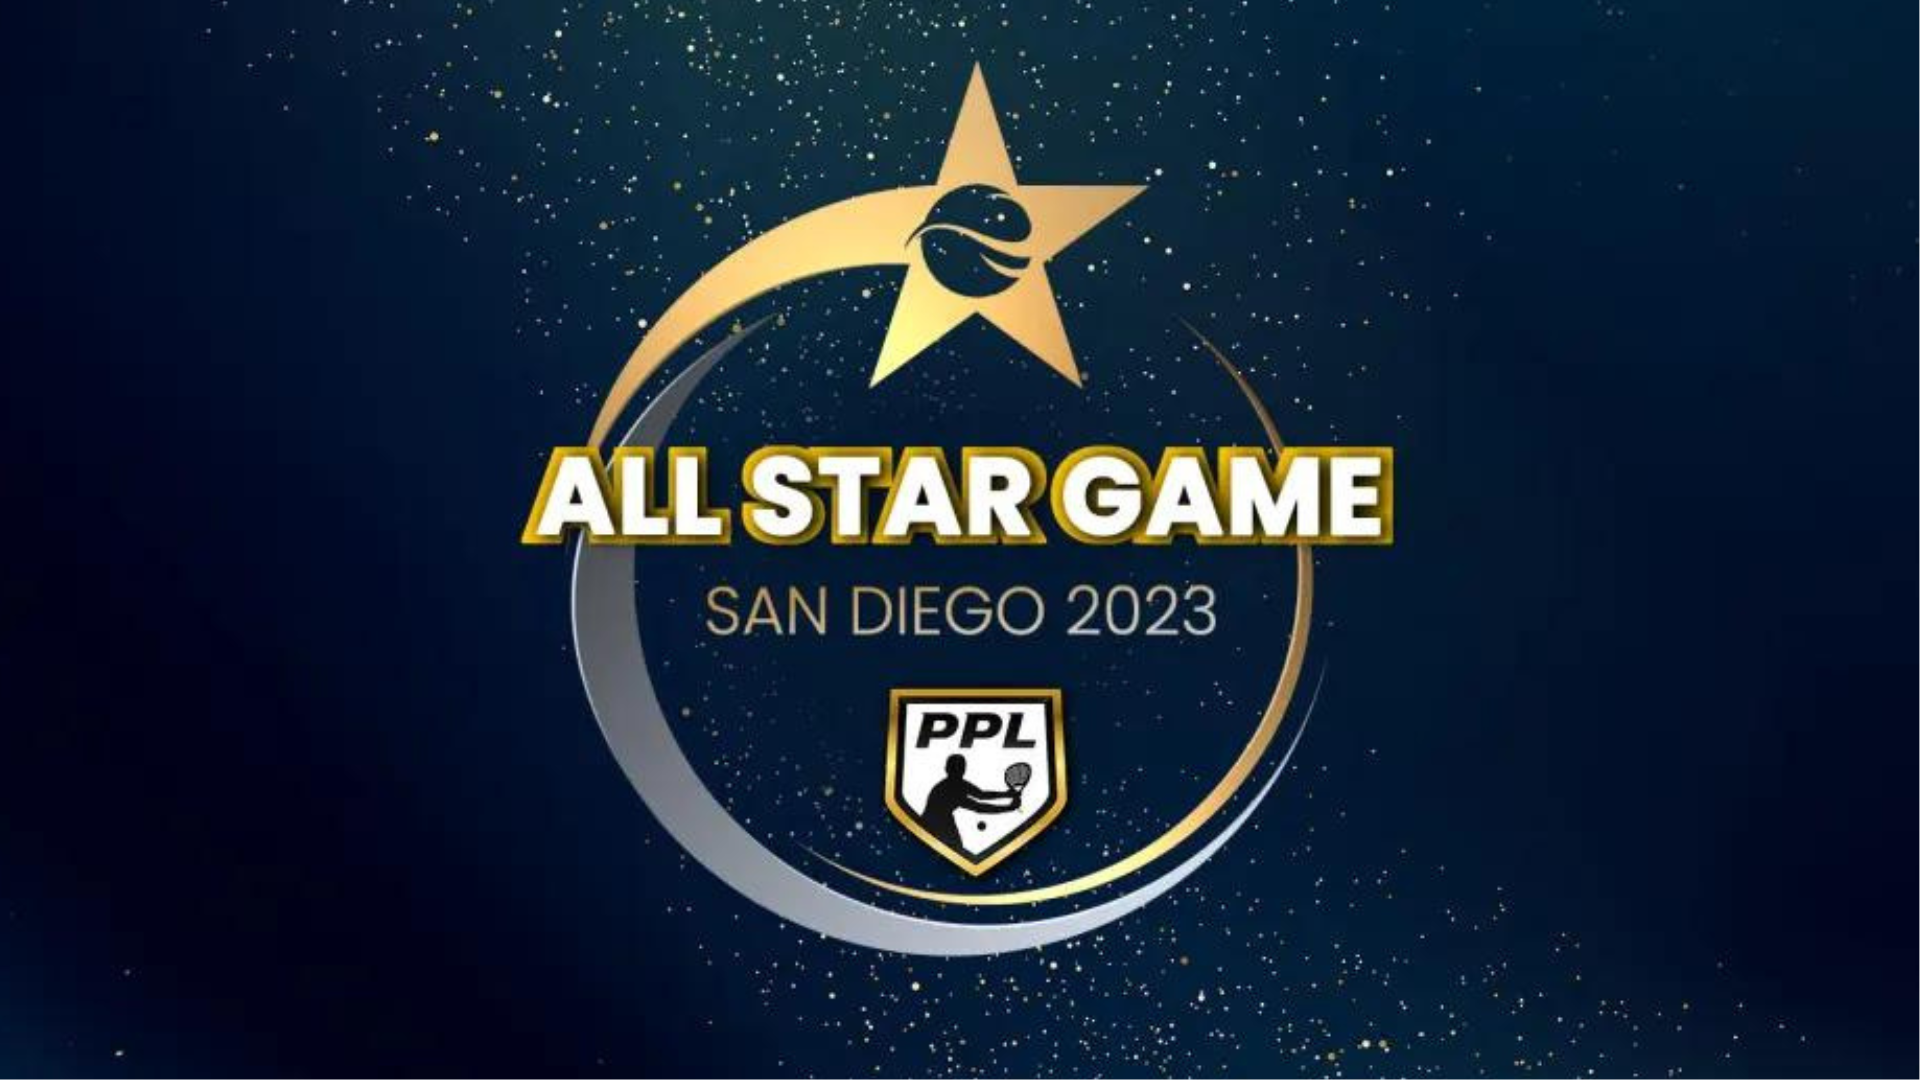 All Star Game PPL 2023 Estados Unidos San Diego